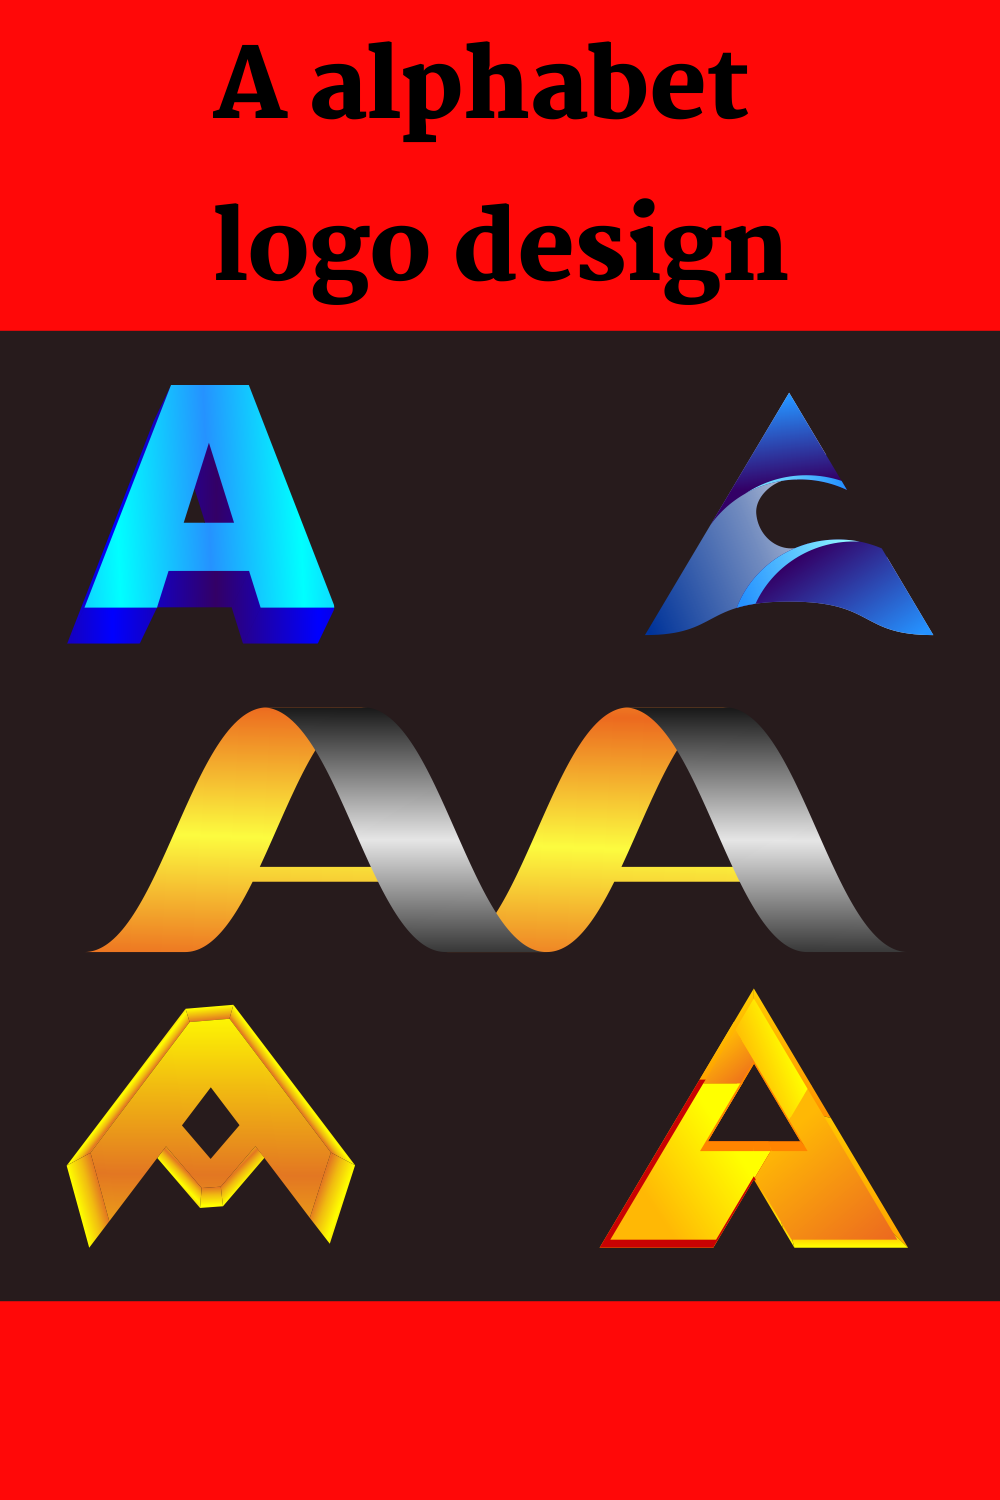 A alphabet logo design pinterest preview image.